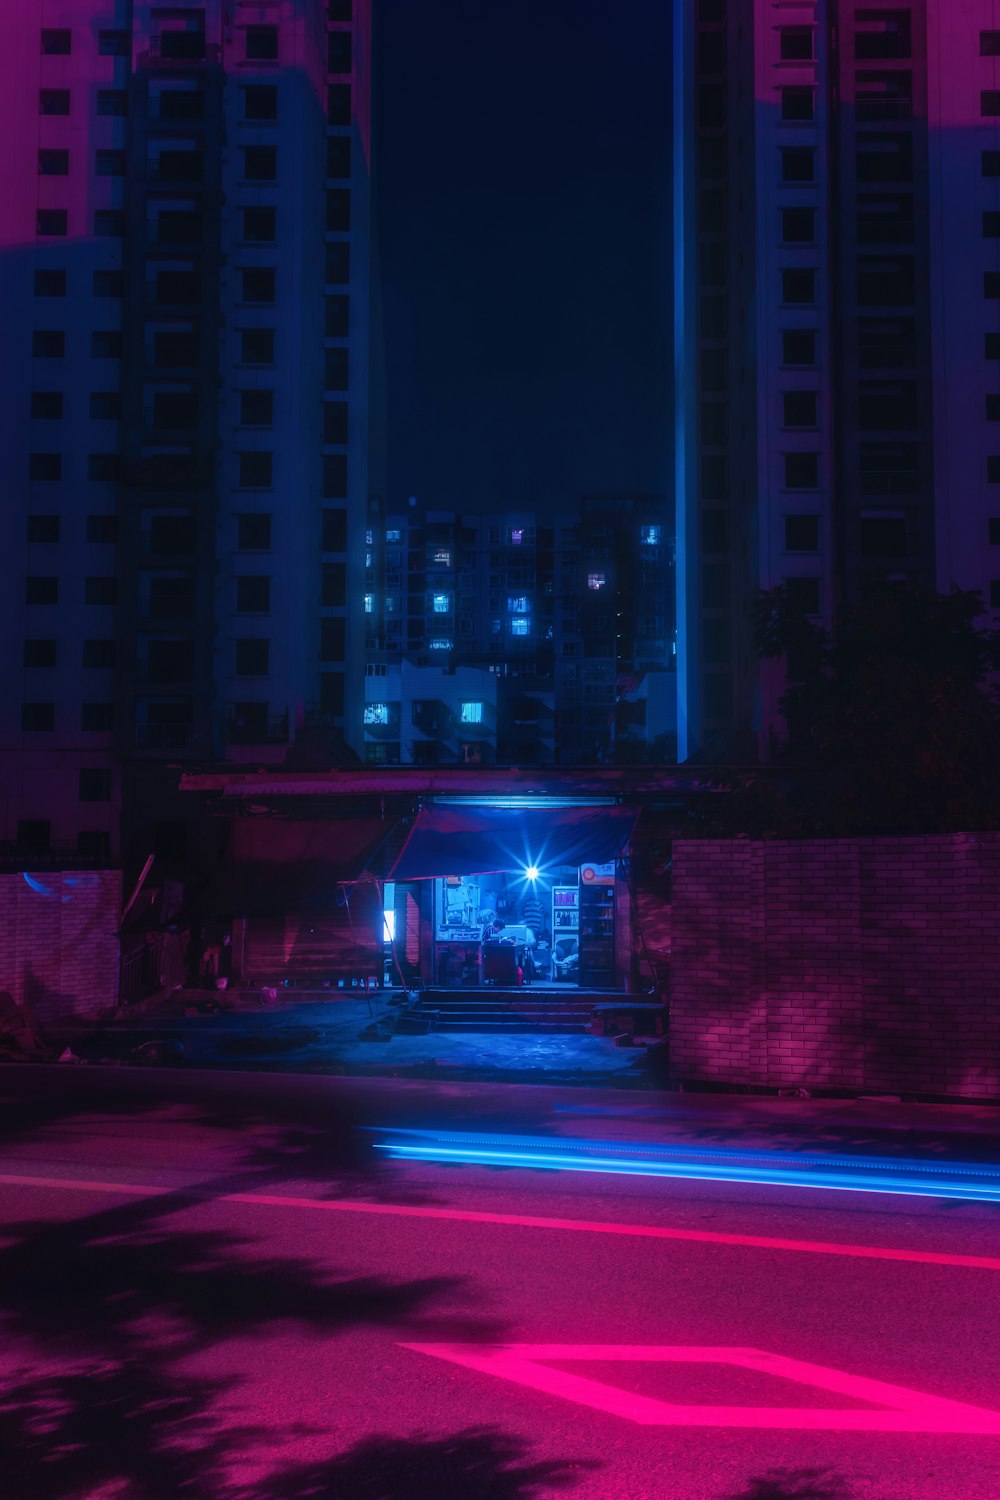 blue light building during nighttime